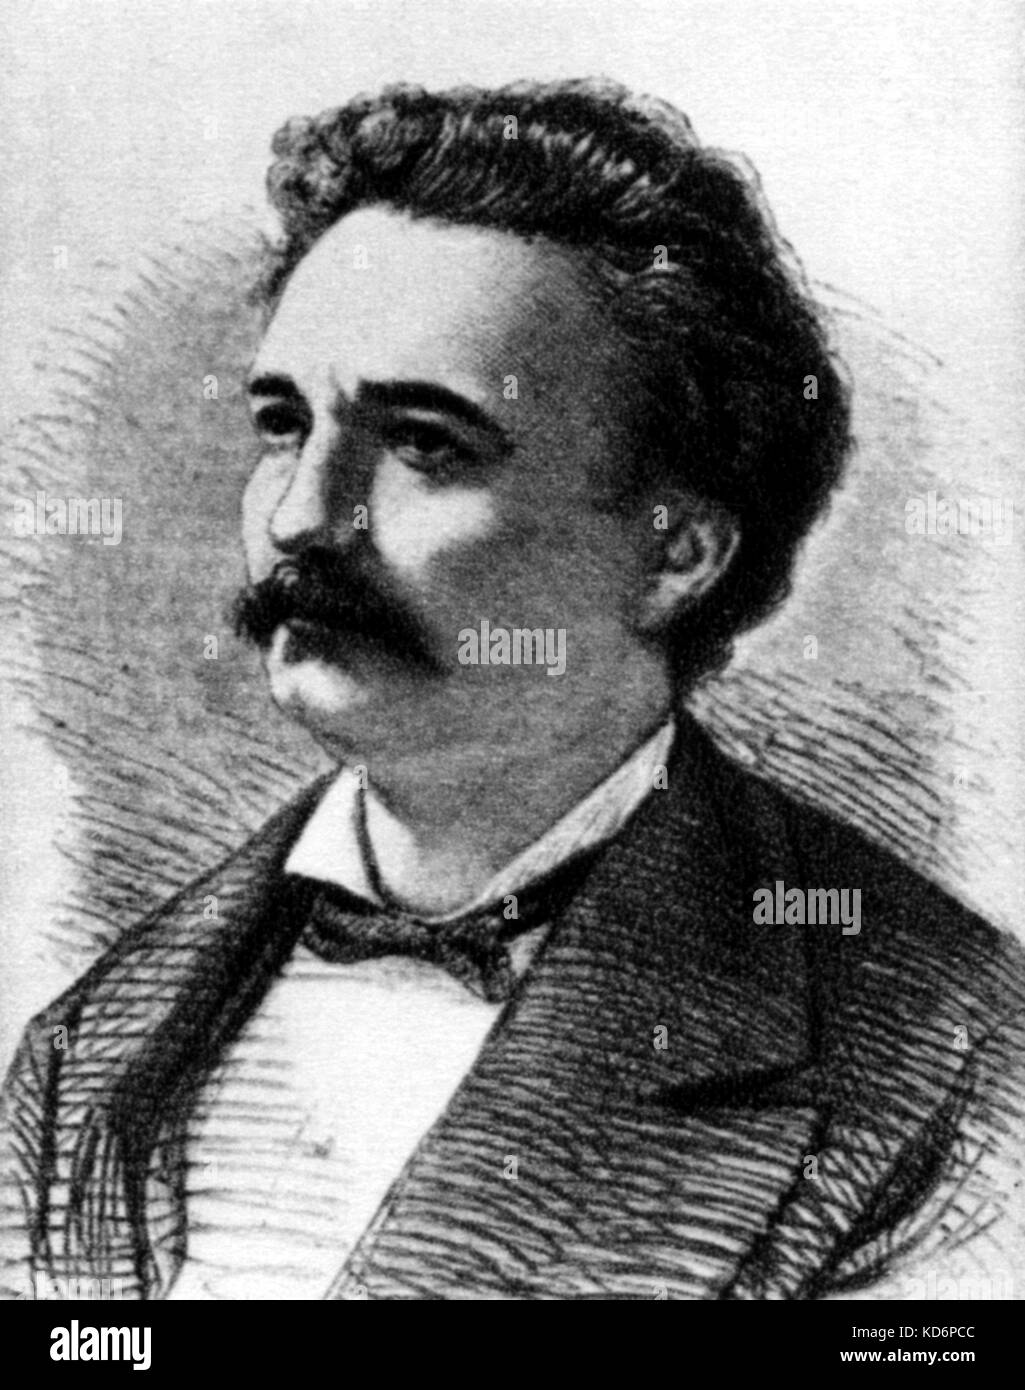 Angelo Masini (1845-1926)  - portrait Italian tenor who performed in Verdi's Requiem . Stock Photo